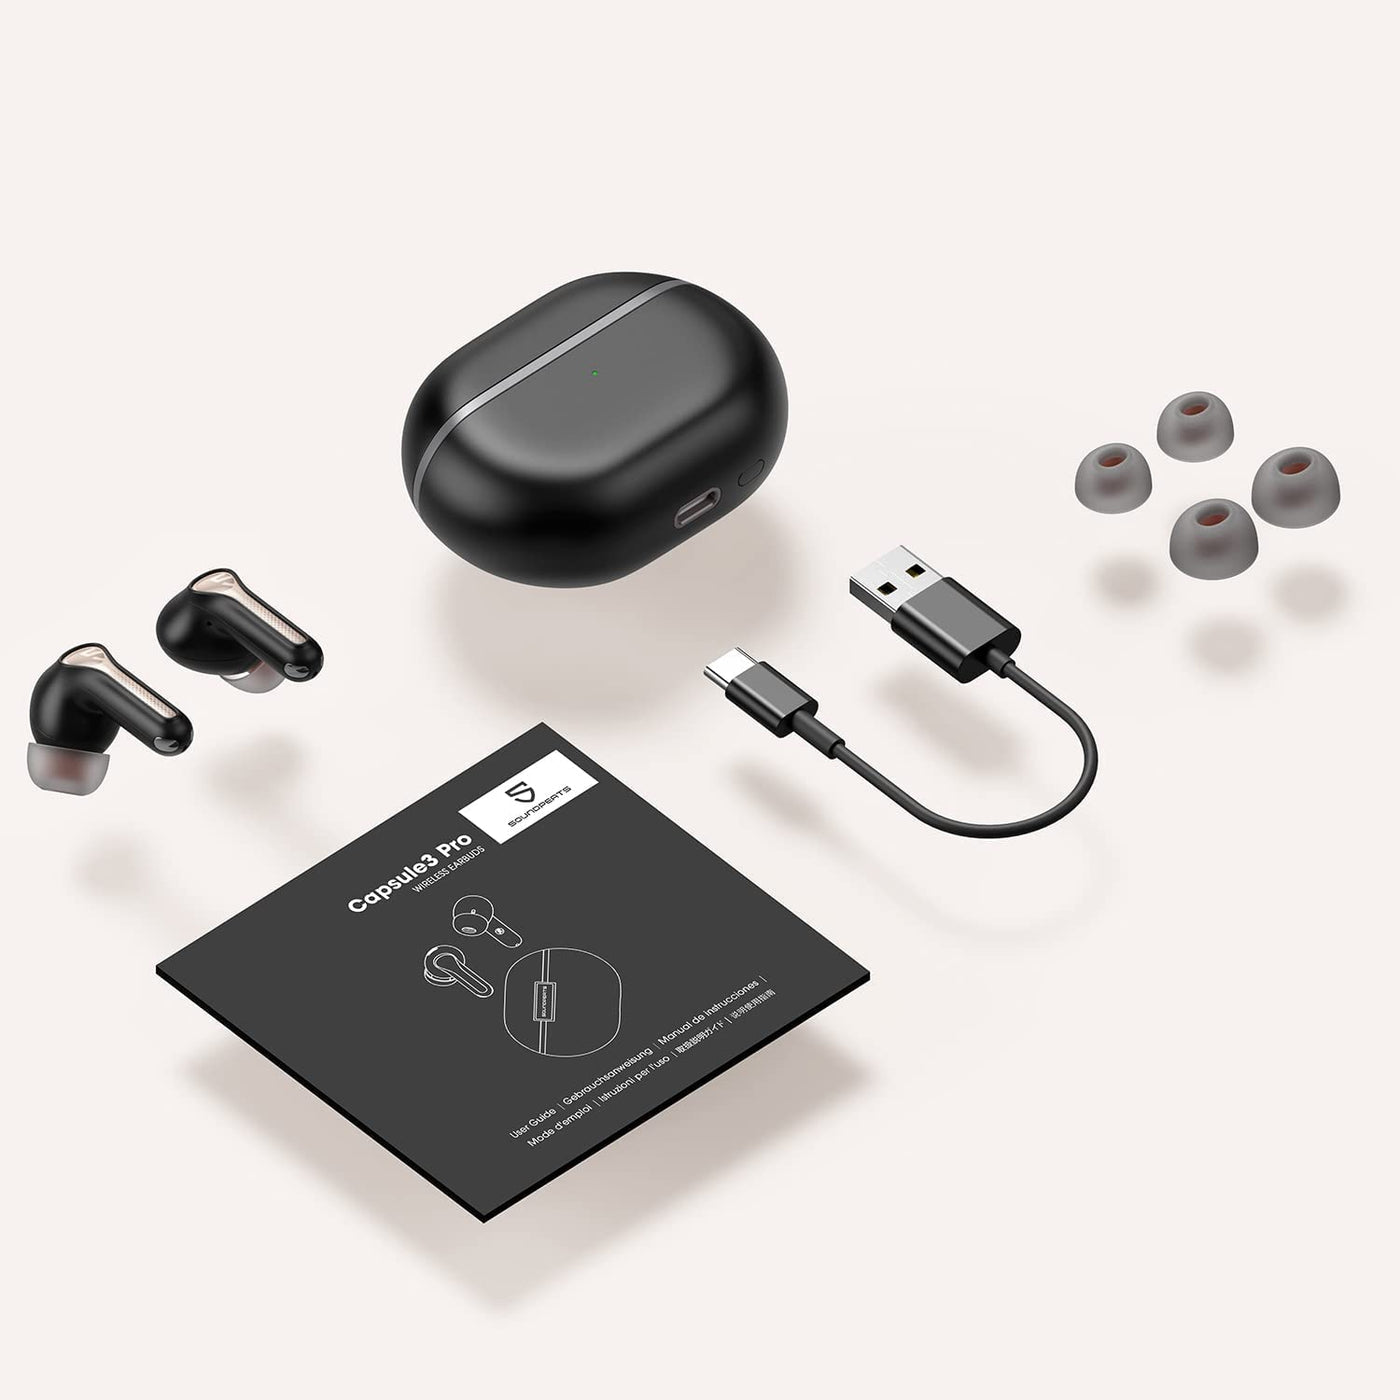 SOUNDPEATS Capsule3 PRO ANC אוזניות כפתור אלחוטיות עם ביטול רעשים אקטיבי בצבע לבן